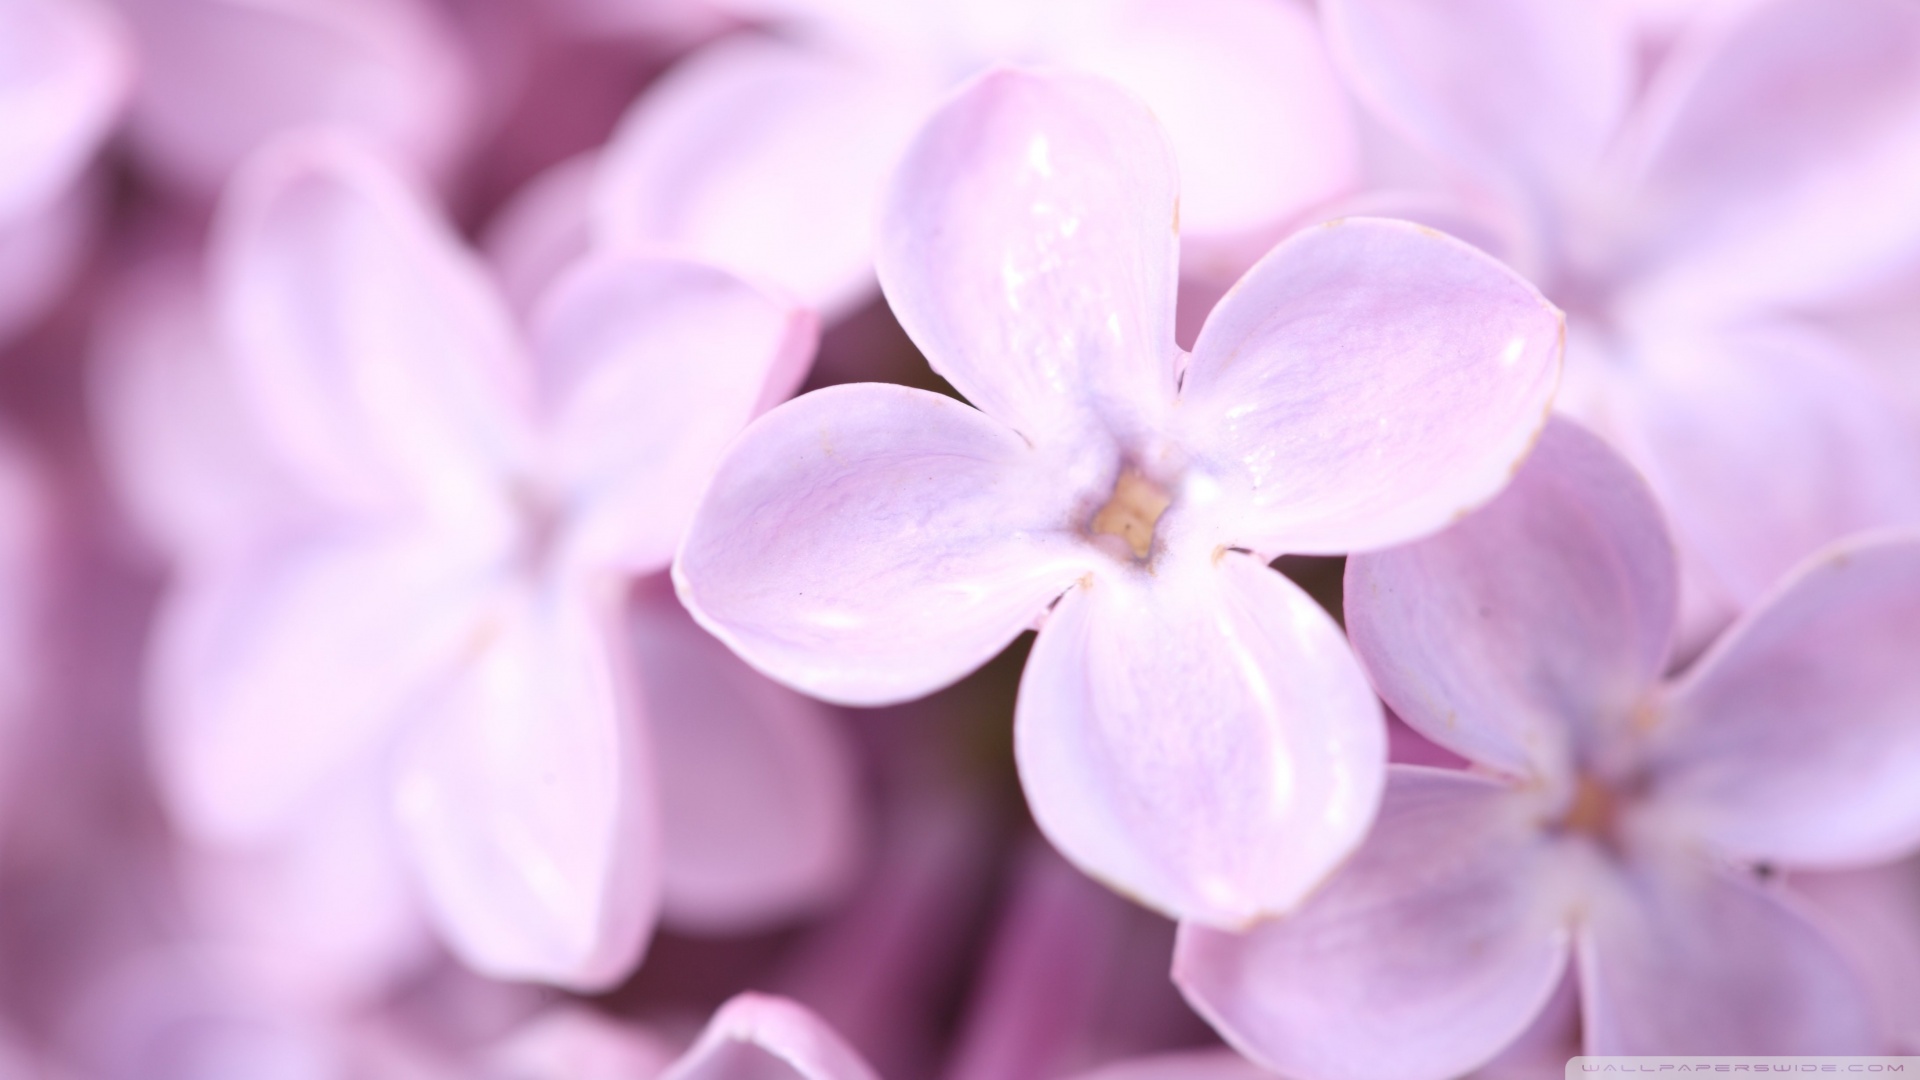 Violet Lilac Flowers Wallpaper